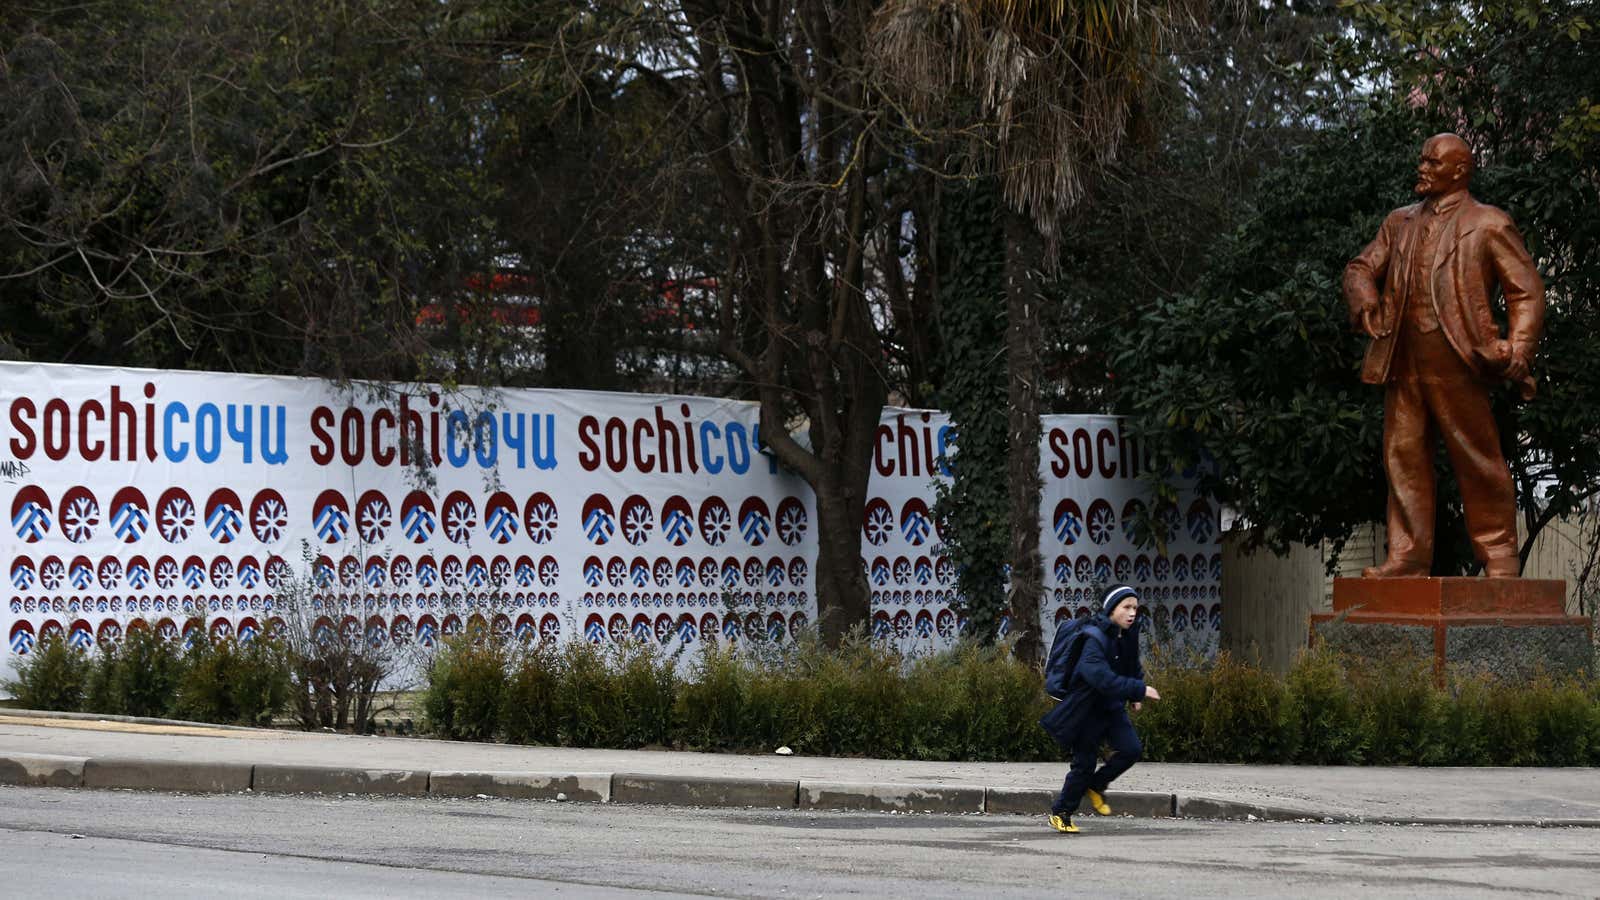 Boycotting Sochi would not change Russian policy.